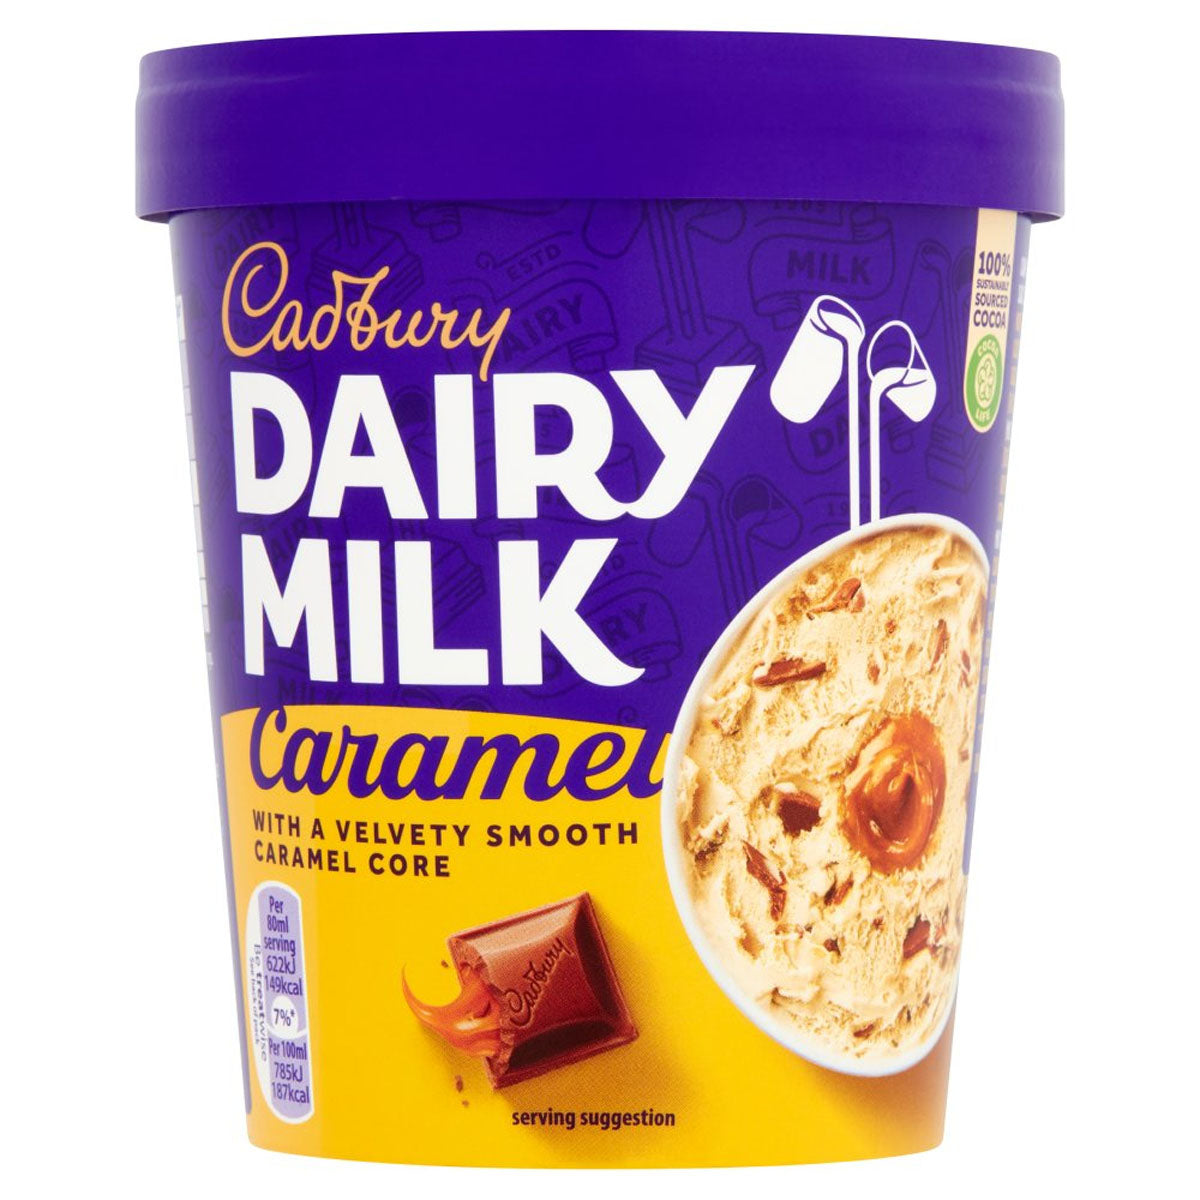 Cadbury - Dairy Milk Caramel Ice Cream Tub - 480ml - Continental Food Store